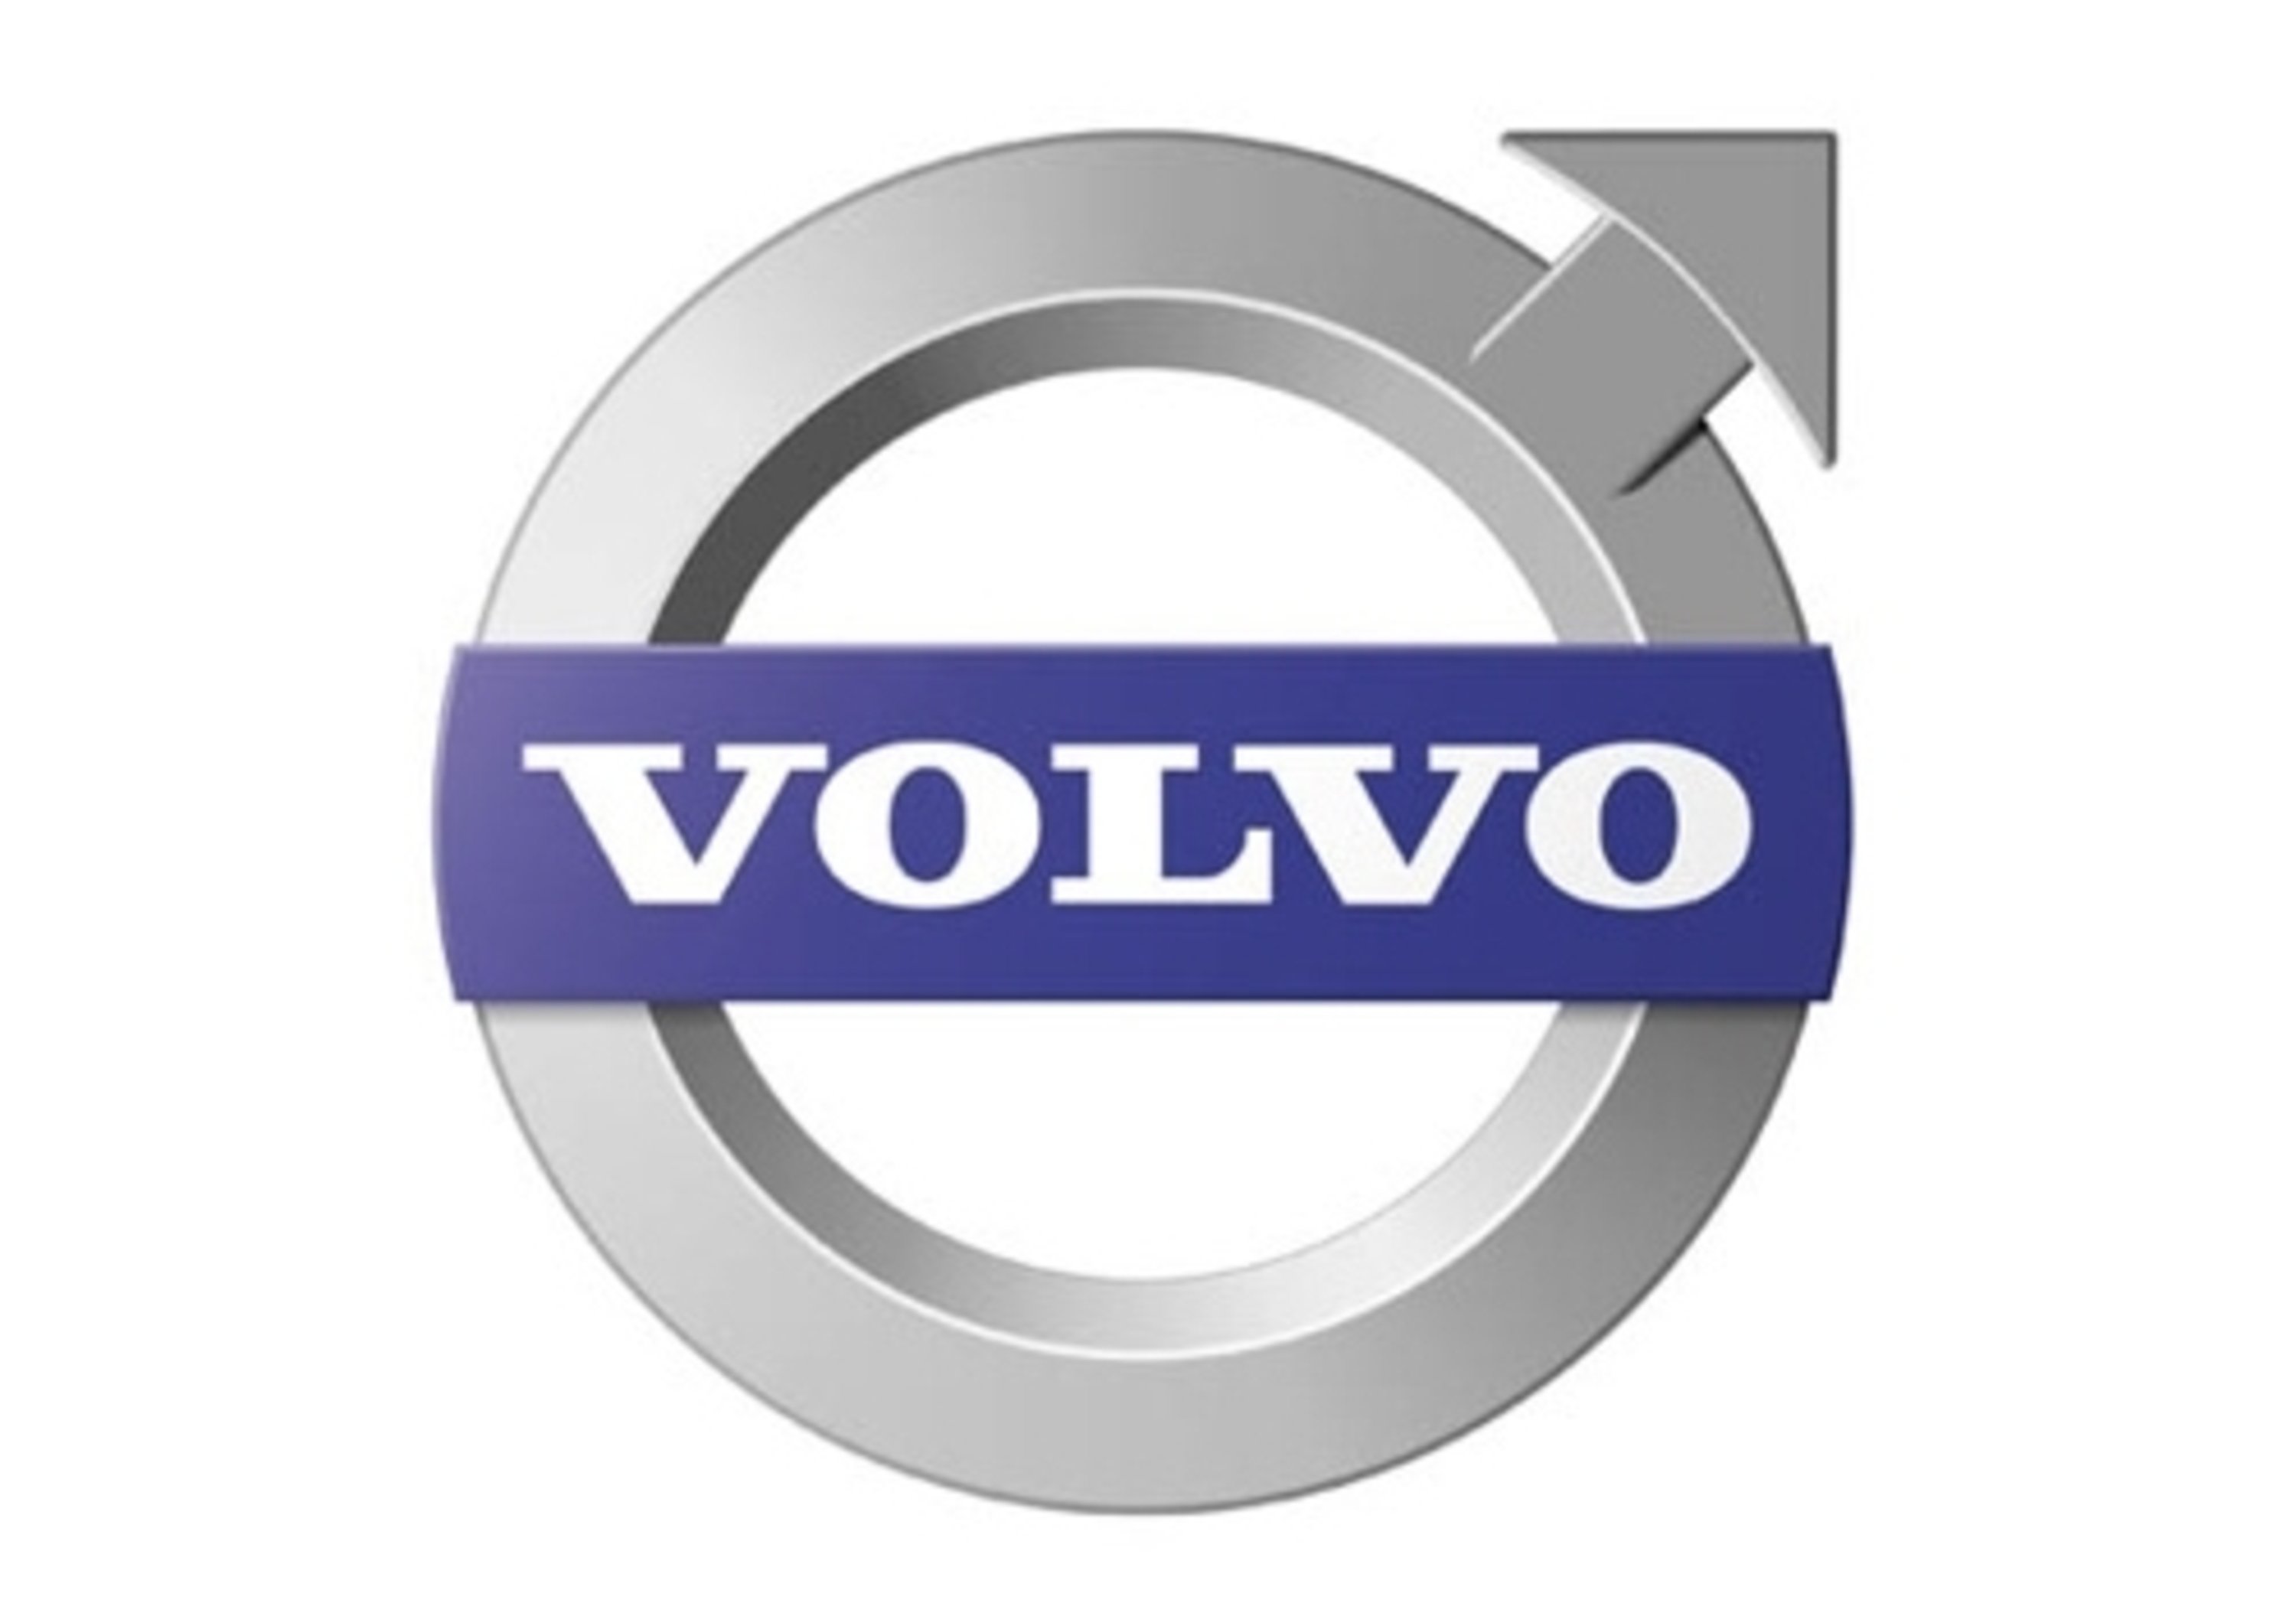 Nuovo logo Volvo